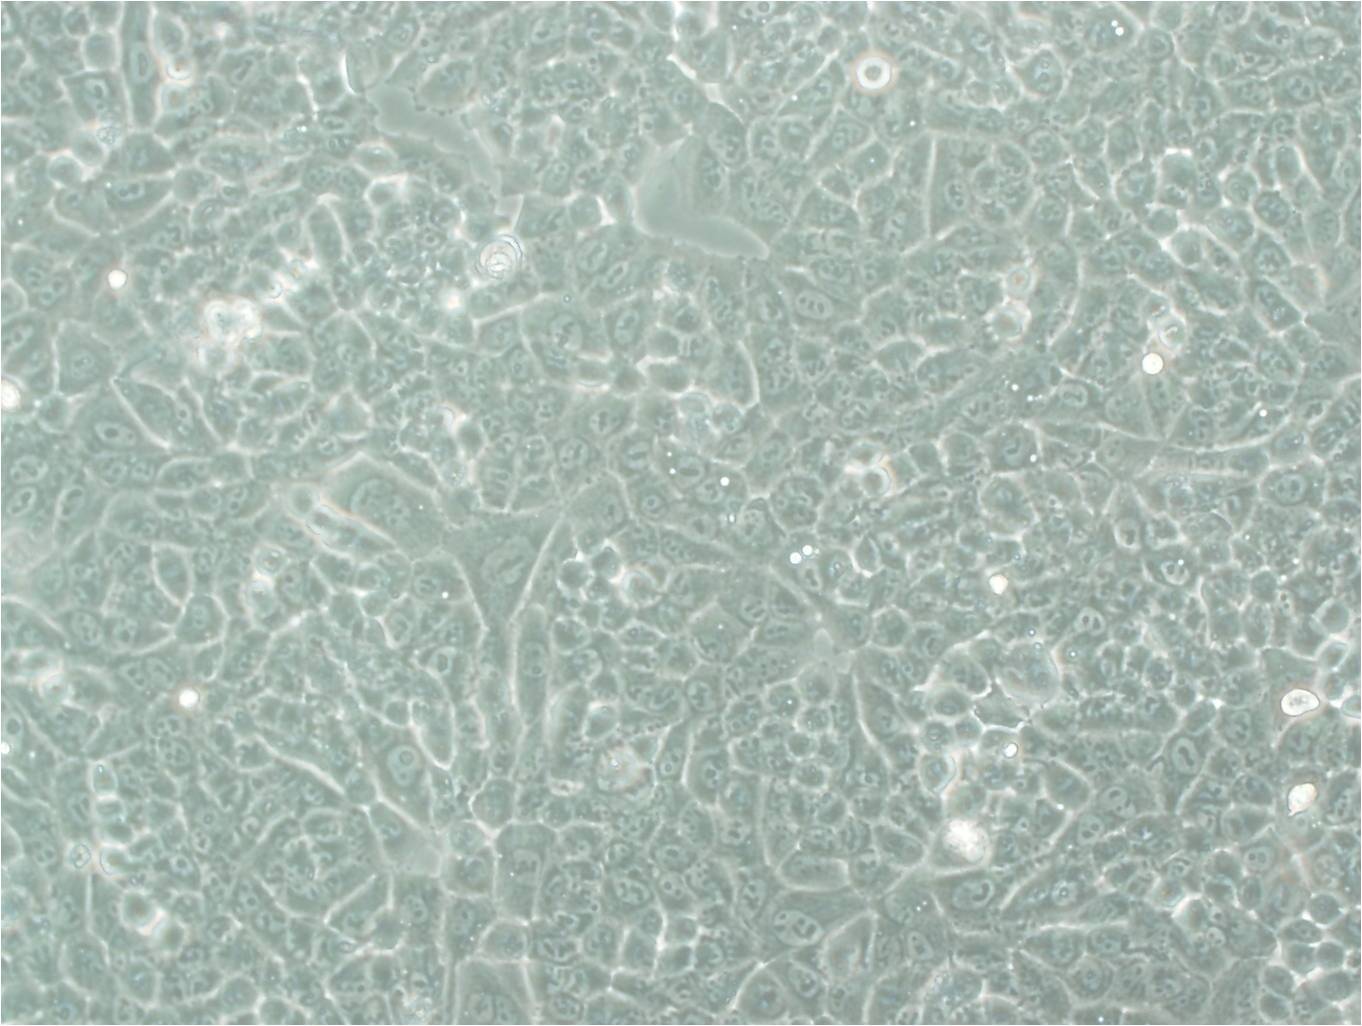 NCI-H187 Fresh Cells|人视网膜母细胞瘤细胞(送STR基因图谱),NCI-H187 Fresh Cells